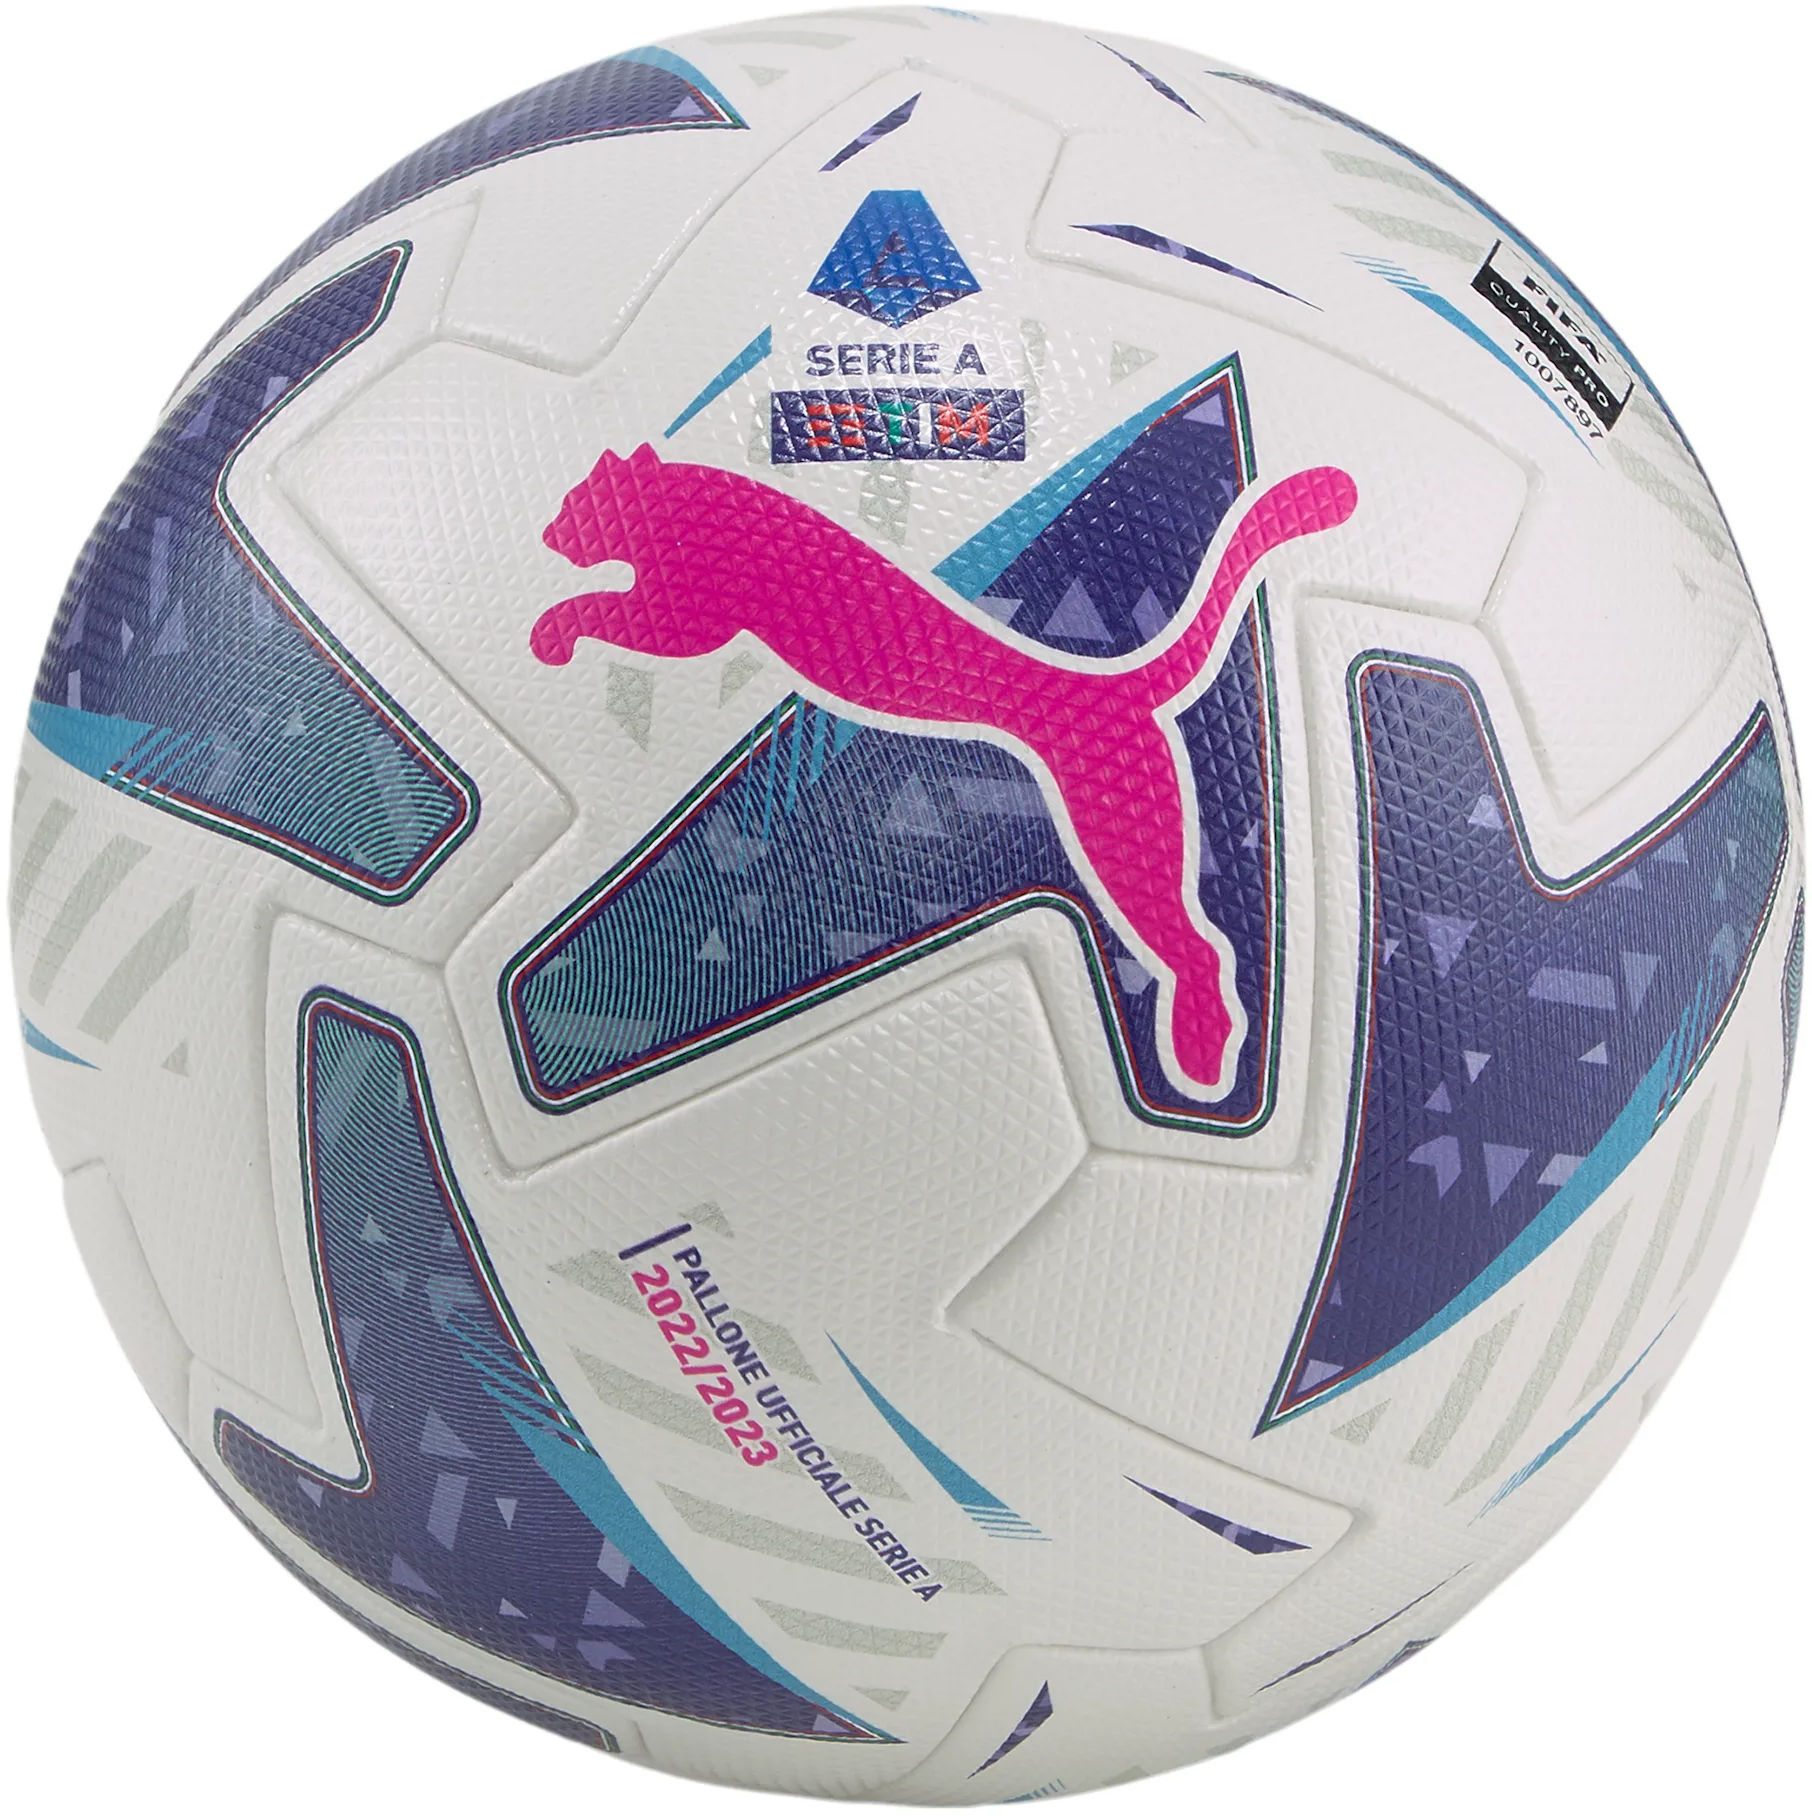 Ballon Puma Orbita Serie A (FIFA Quality Pro)